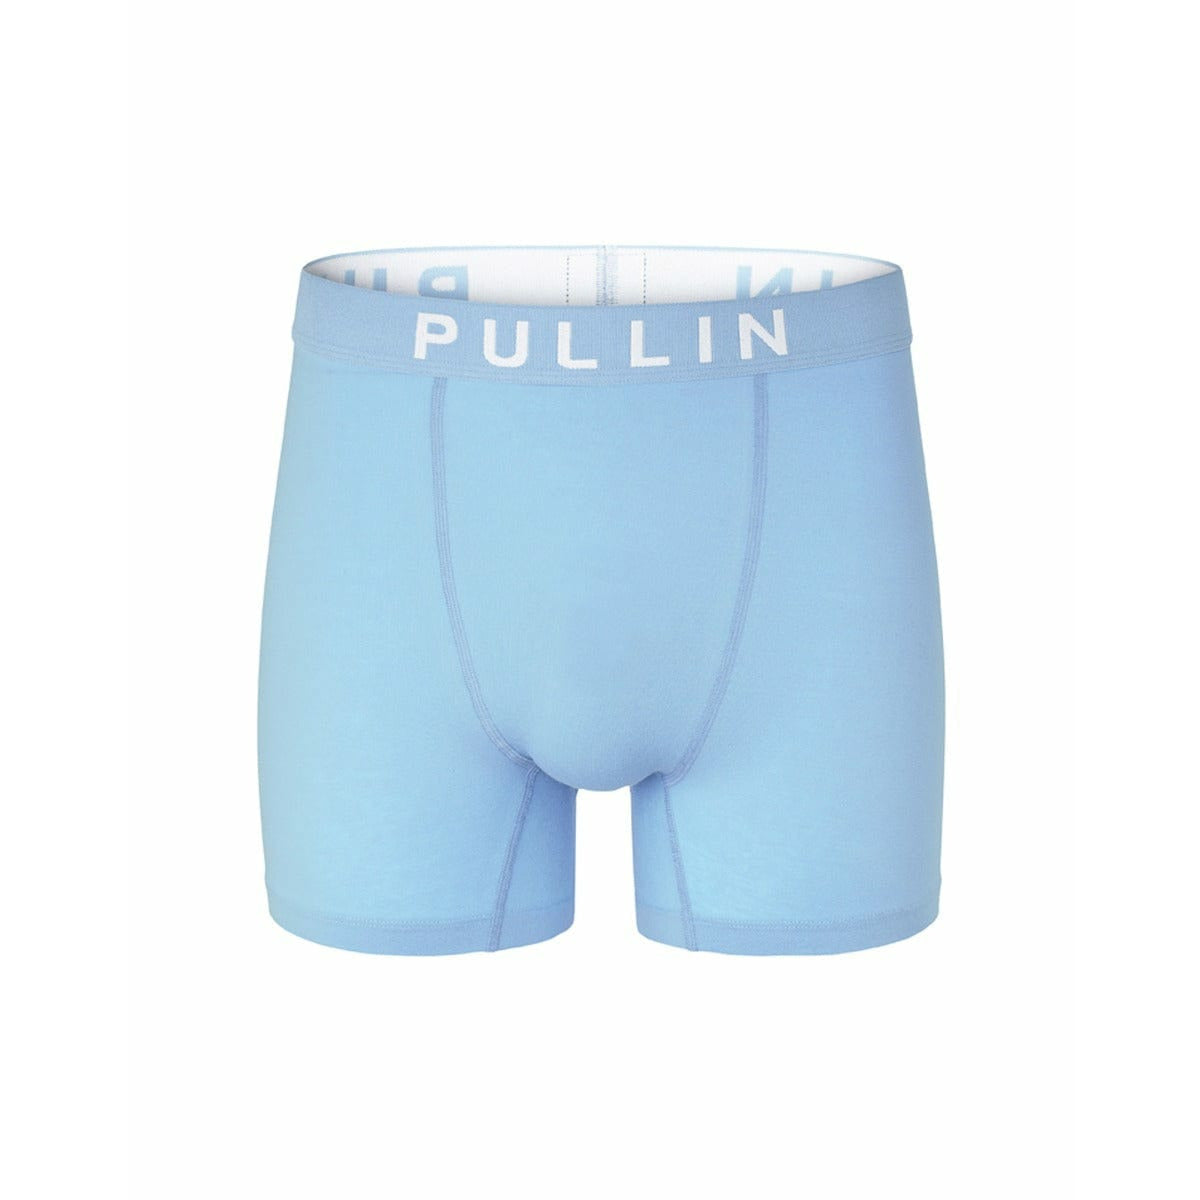 Pullin Fashion 2 Sky21 Boxer Brief - Underground Clothing